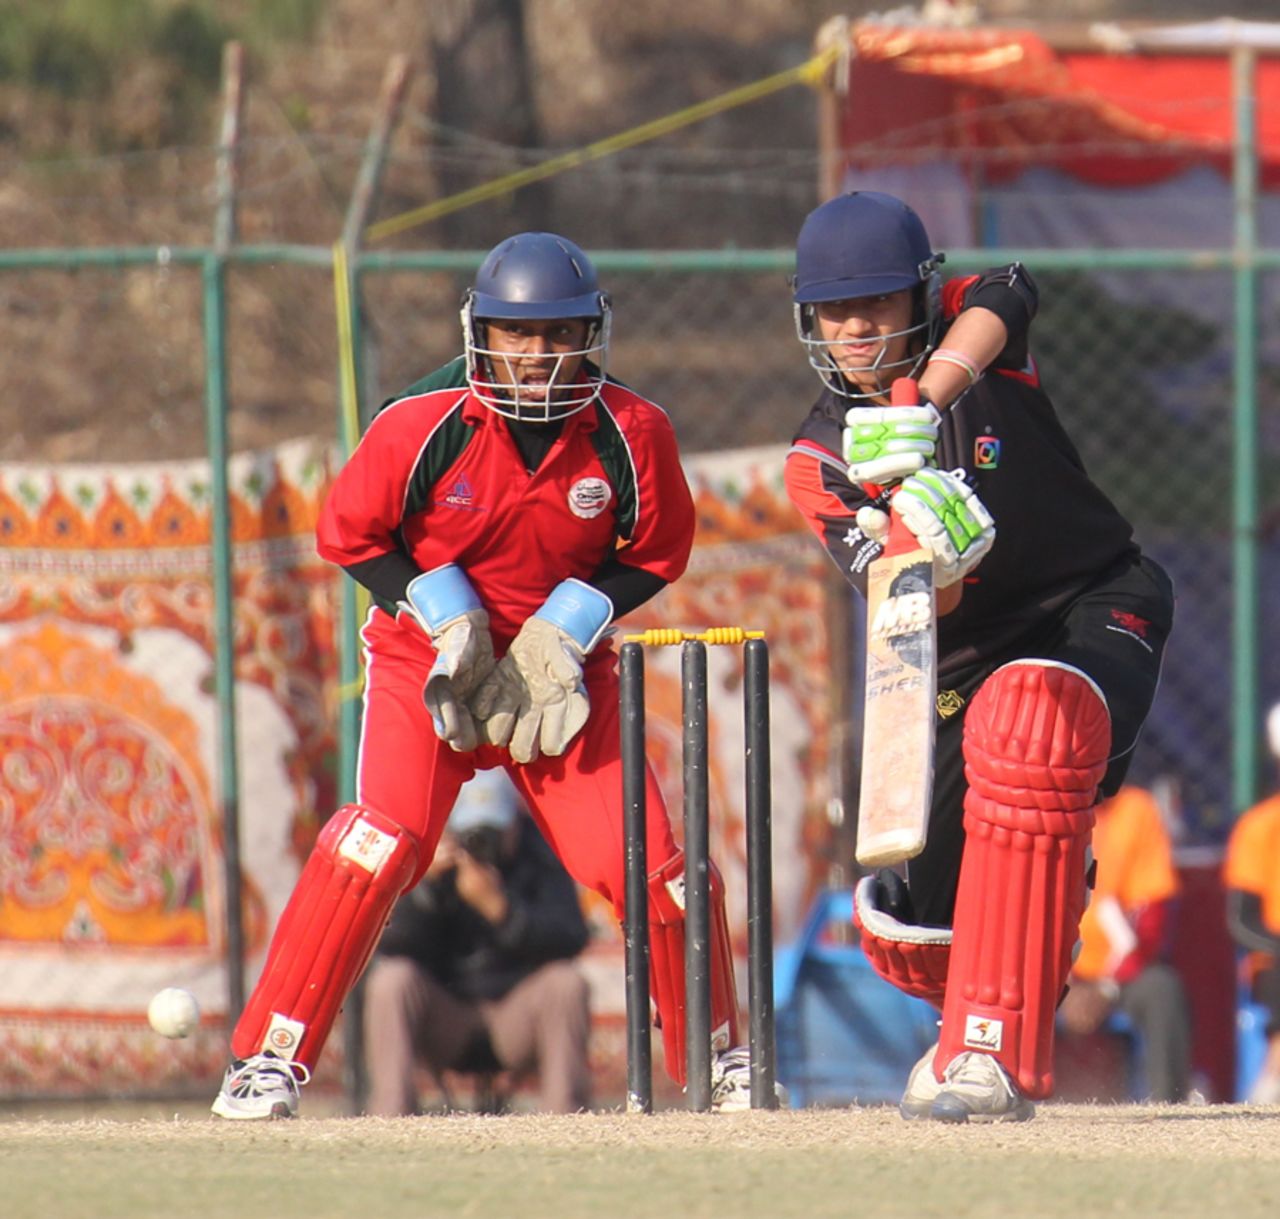 Aizaz Khan's batting helped Hong Kong win their semi-final against Oman at the ACC Twenty20 Cup 2011 in Kathmandu on 6th December 2011